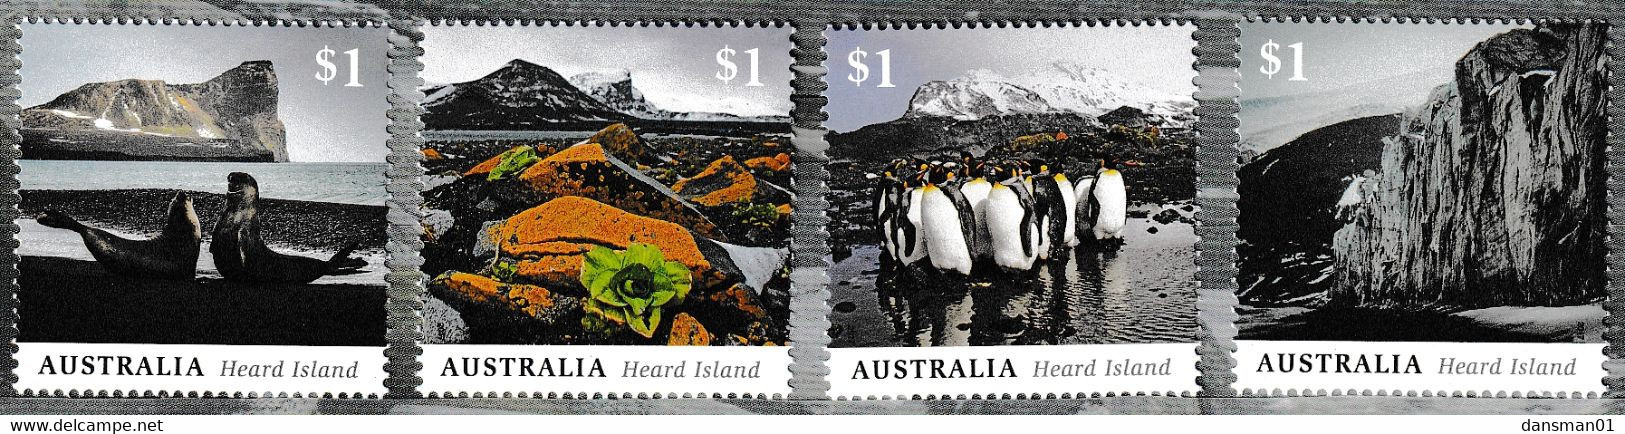 Australia 2017 Heard Island Mint Never Hinged - Mint Stamps